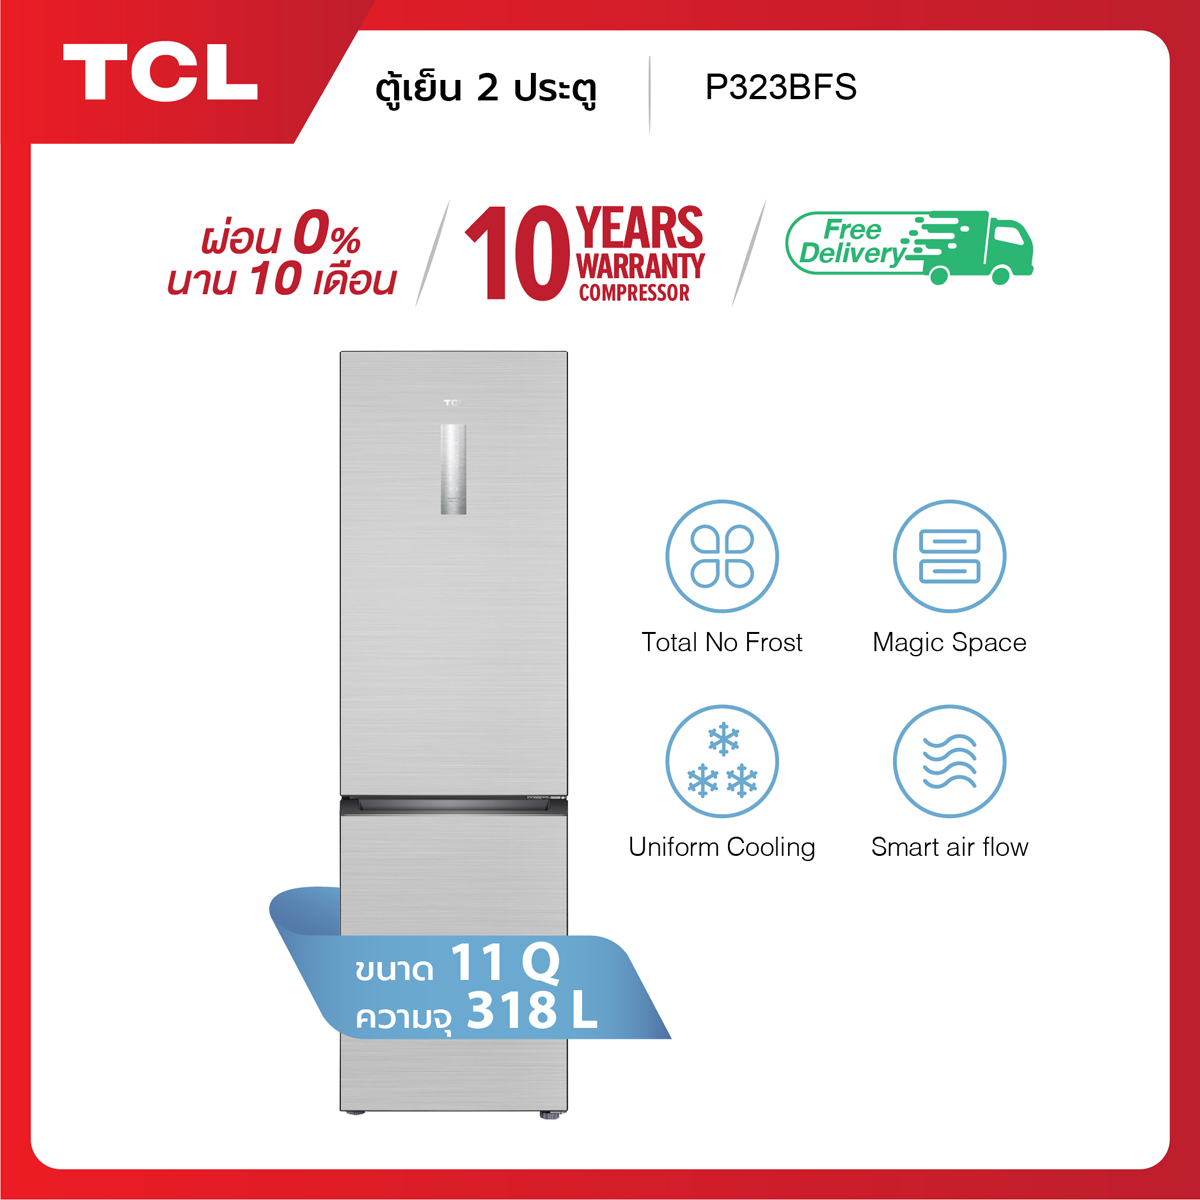 [New Launch เพิ่มใส่รถเข็นเลย!] NEW TCL ตู้เย็น 2 ประตู [ผ่อน 0% นาน 10 เดือน] รุ่น P323BFS ขนาด 11 Q 318 ลิตร พร้อมแผงควบคุมระบบดิจิตอล แม่นยำ Smart Function